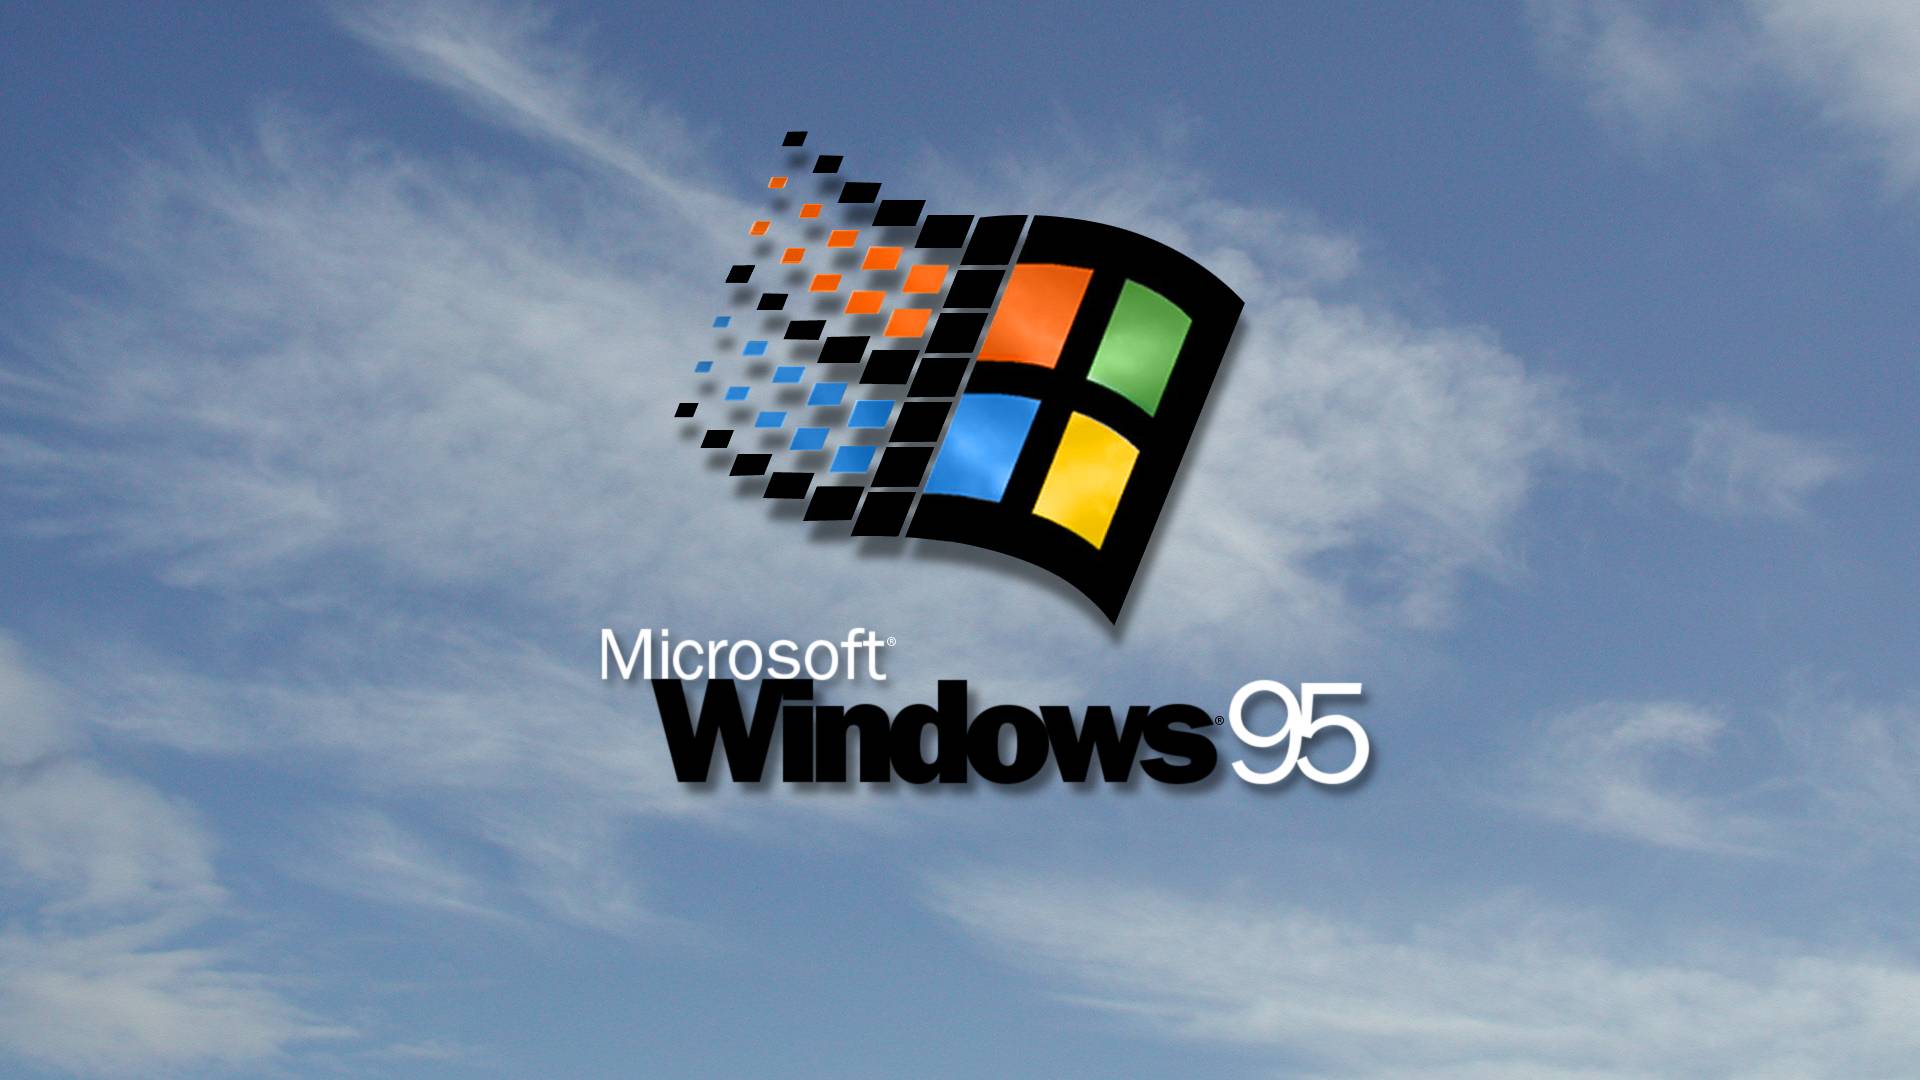 Windows-95-l%C3%A4uft-auf-Xbox-One-Dev-Kit.jpg